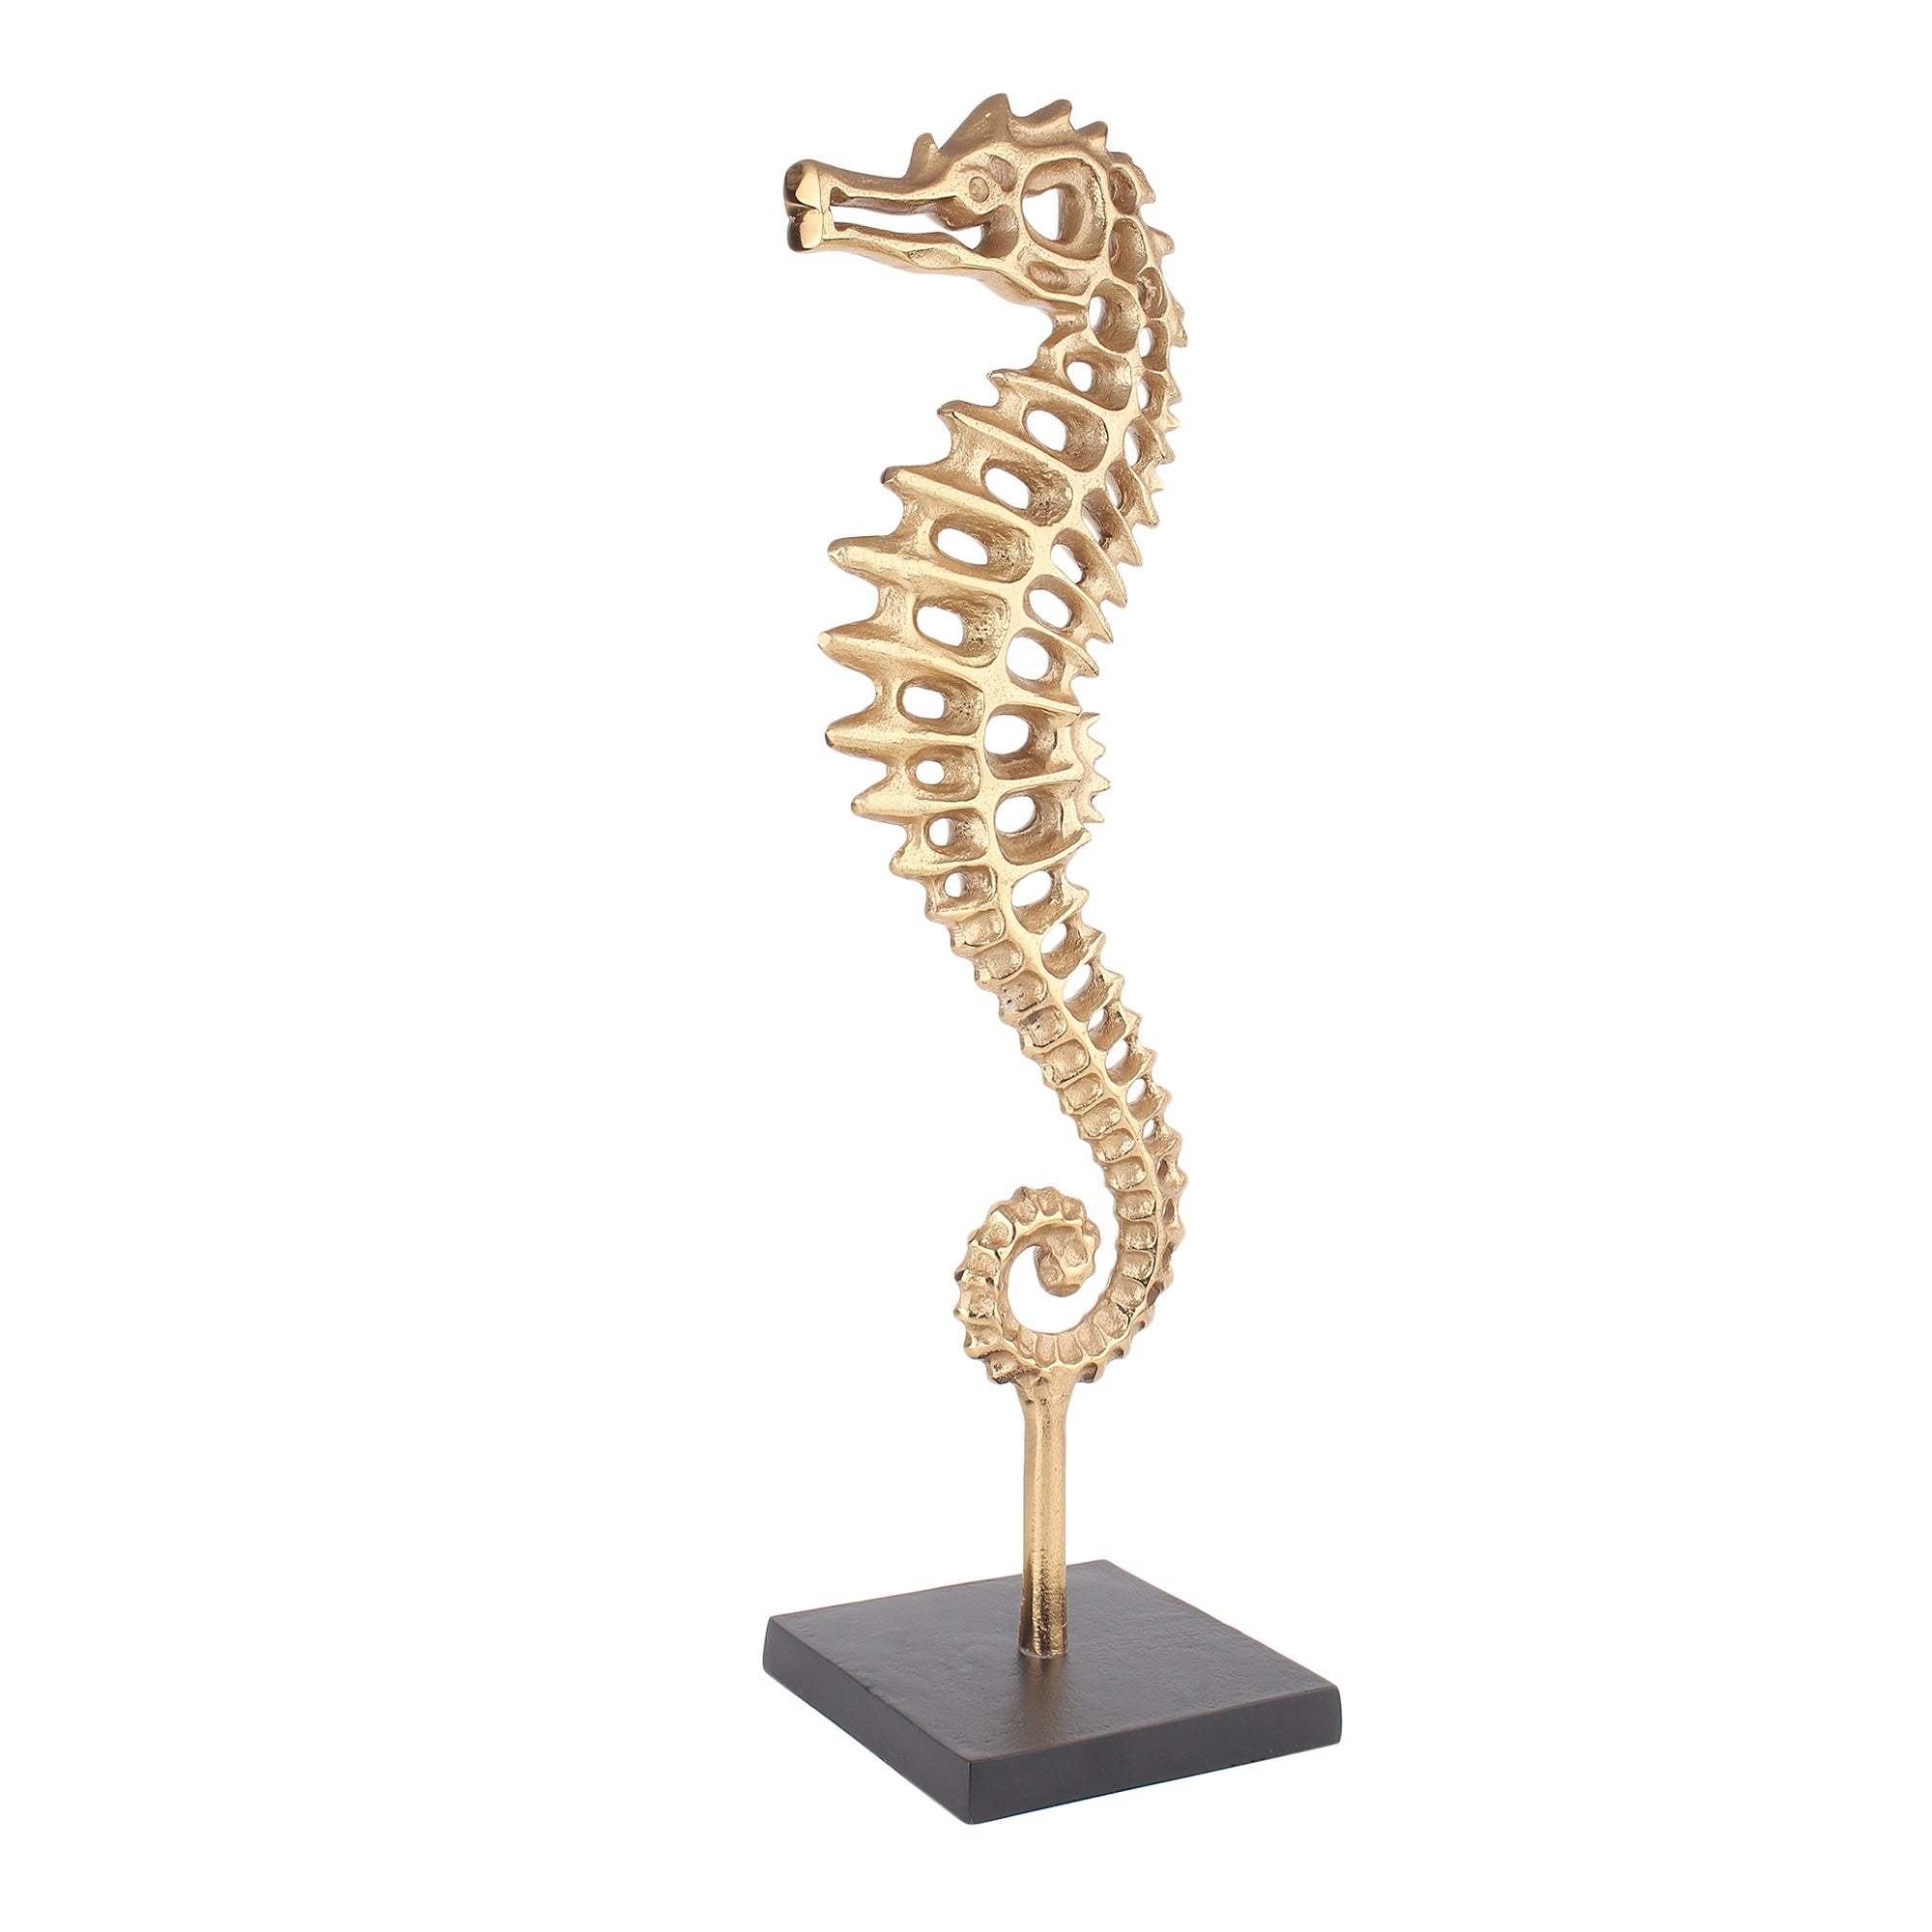 Regall Seahorse Sculpture